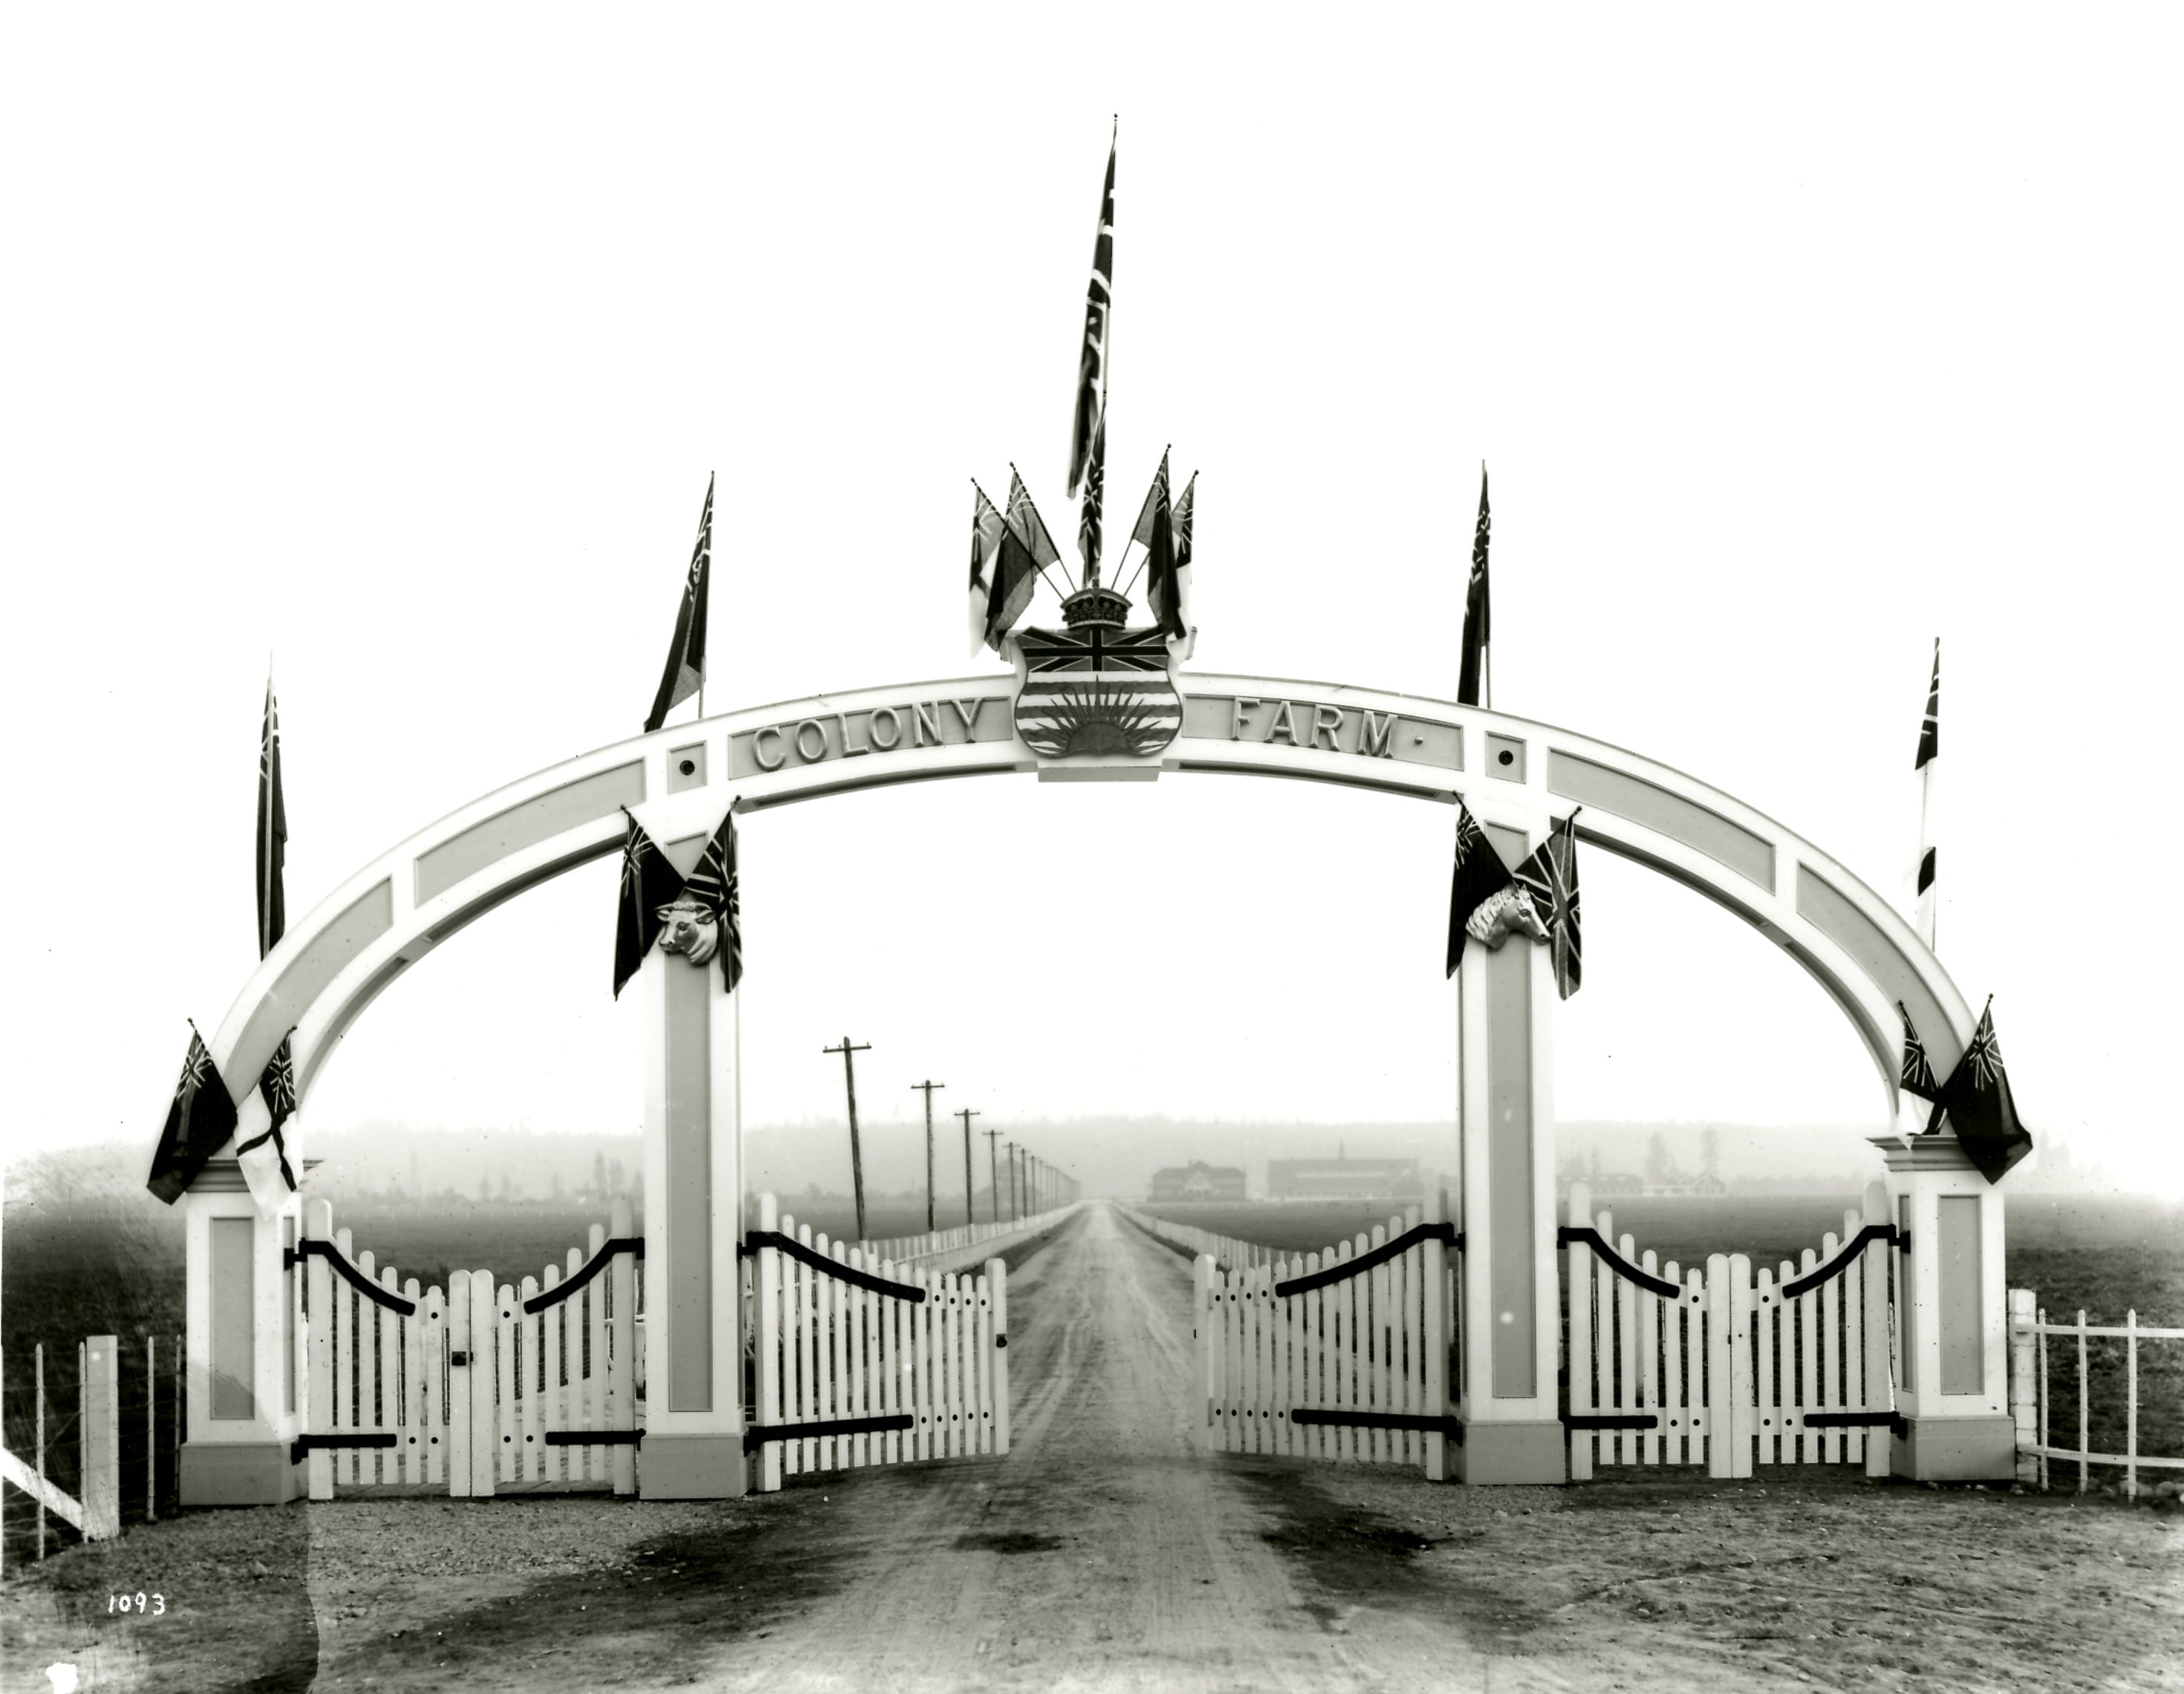 Entrance Arch of Colony Farm, Circa 1912 (JPG) Opens in new window